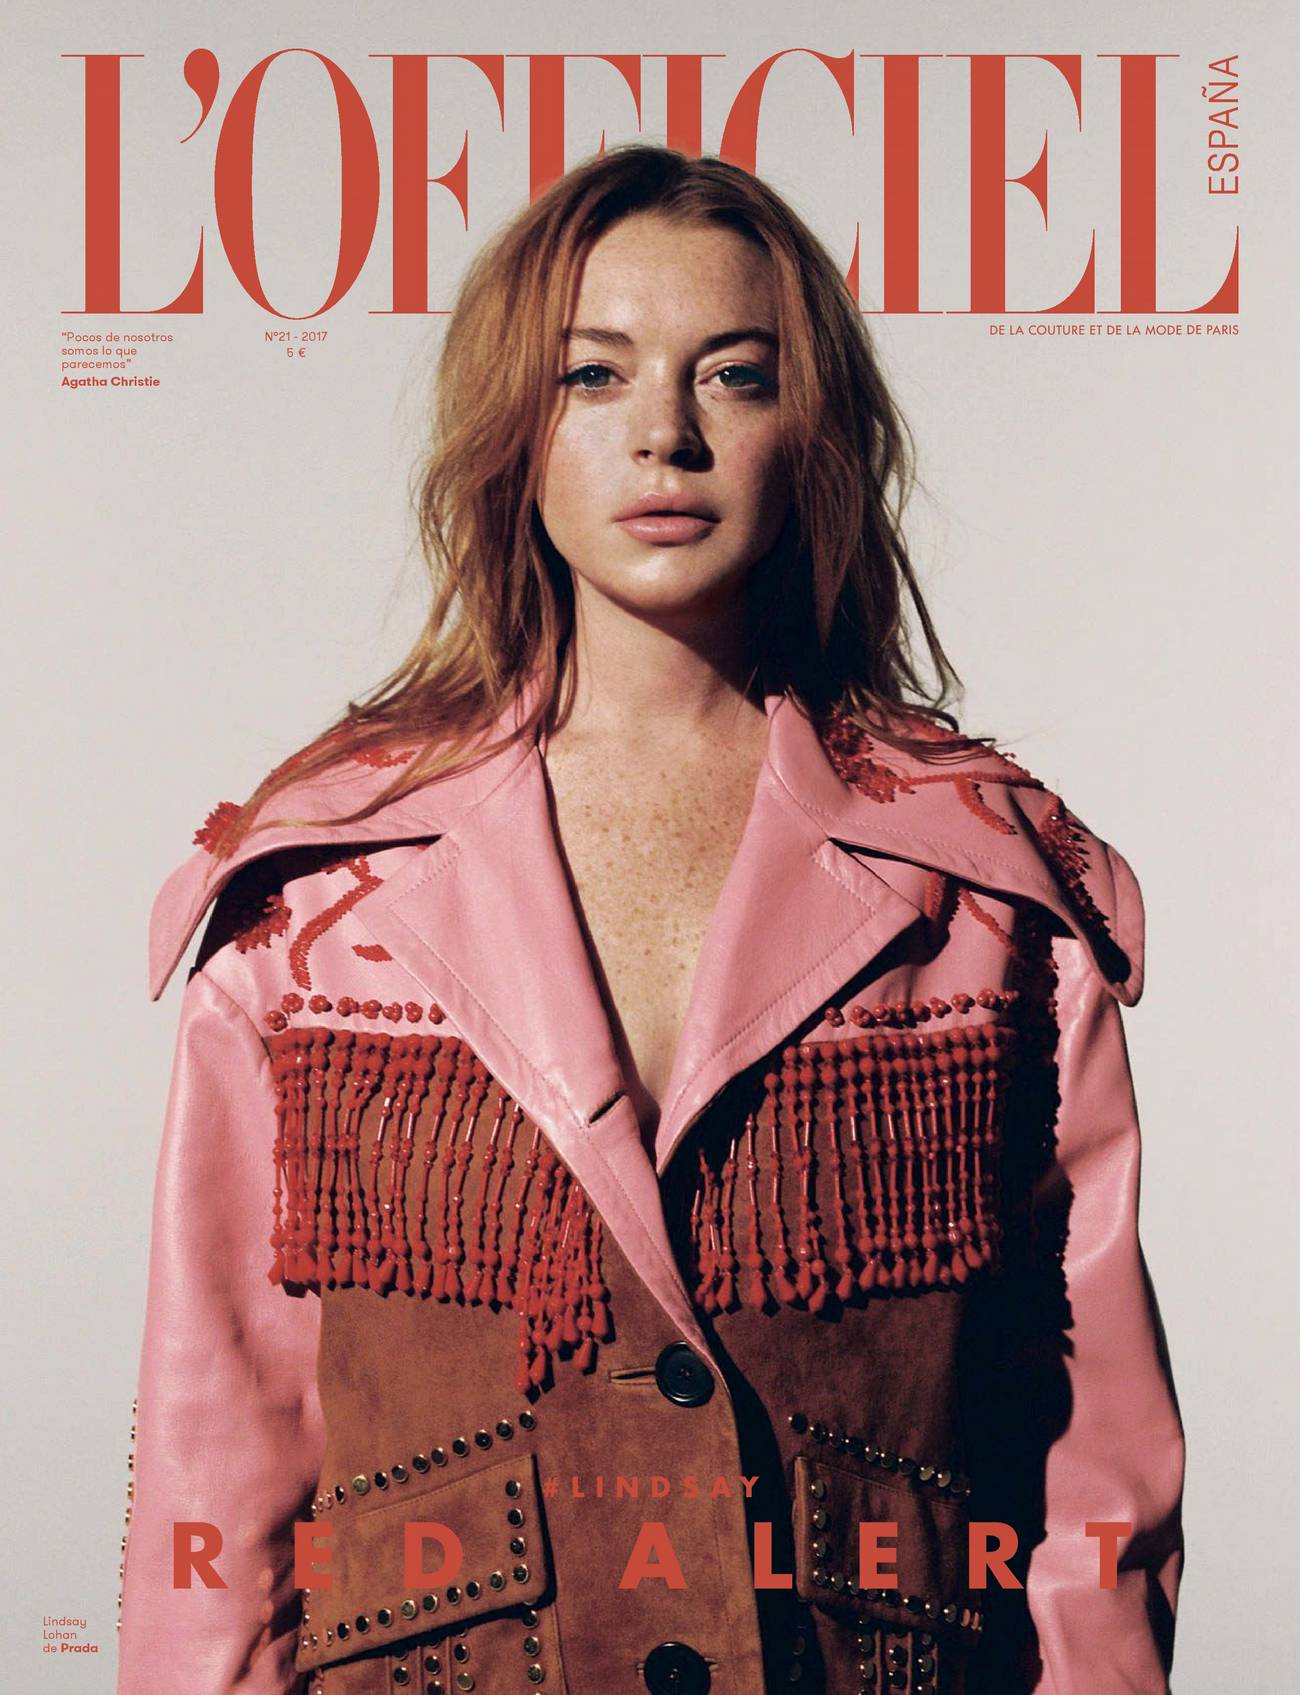 Lindsay Lohan – Photoshoot for L’Officiel Espana 2017